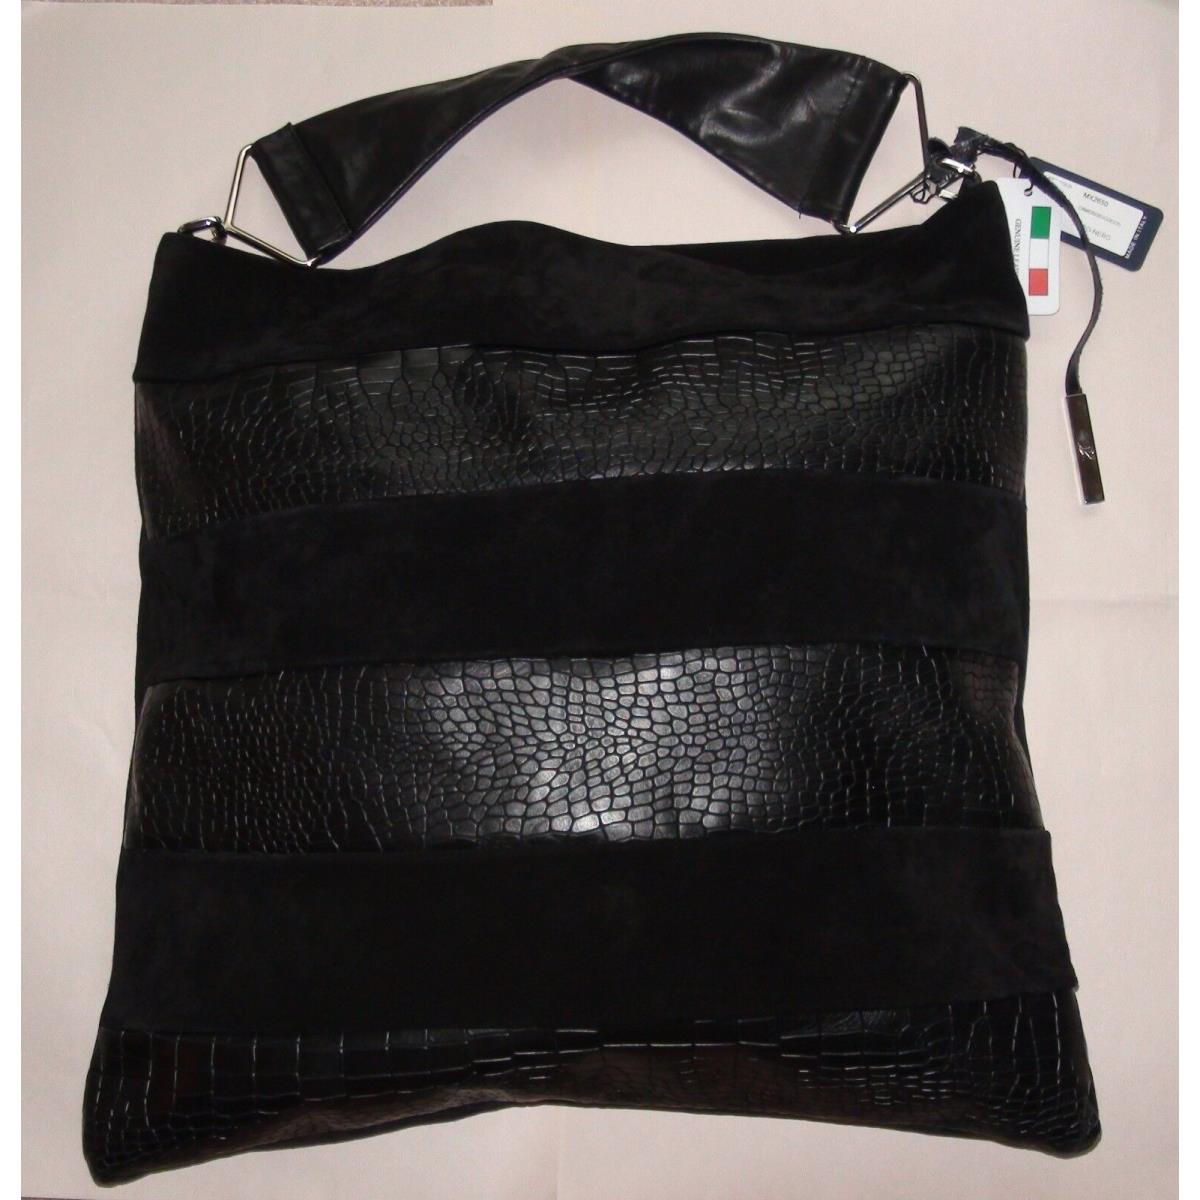 DSquared2 D2 Black Suede Leather Hobo Handbag Purse